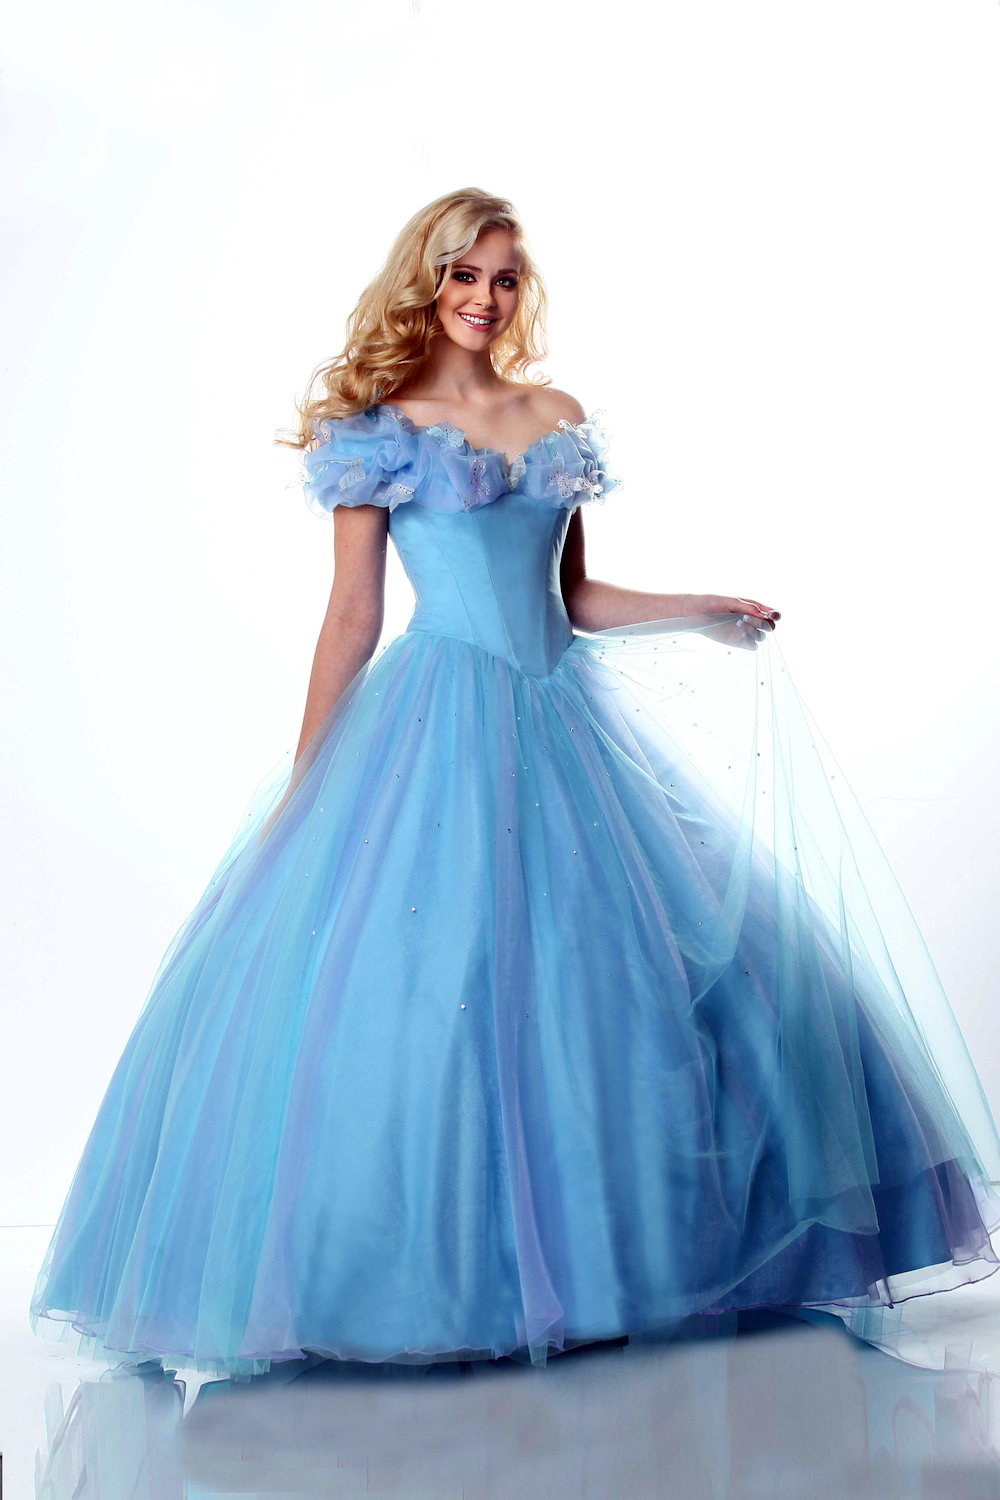 Cinderella dress.